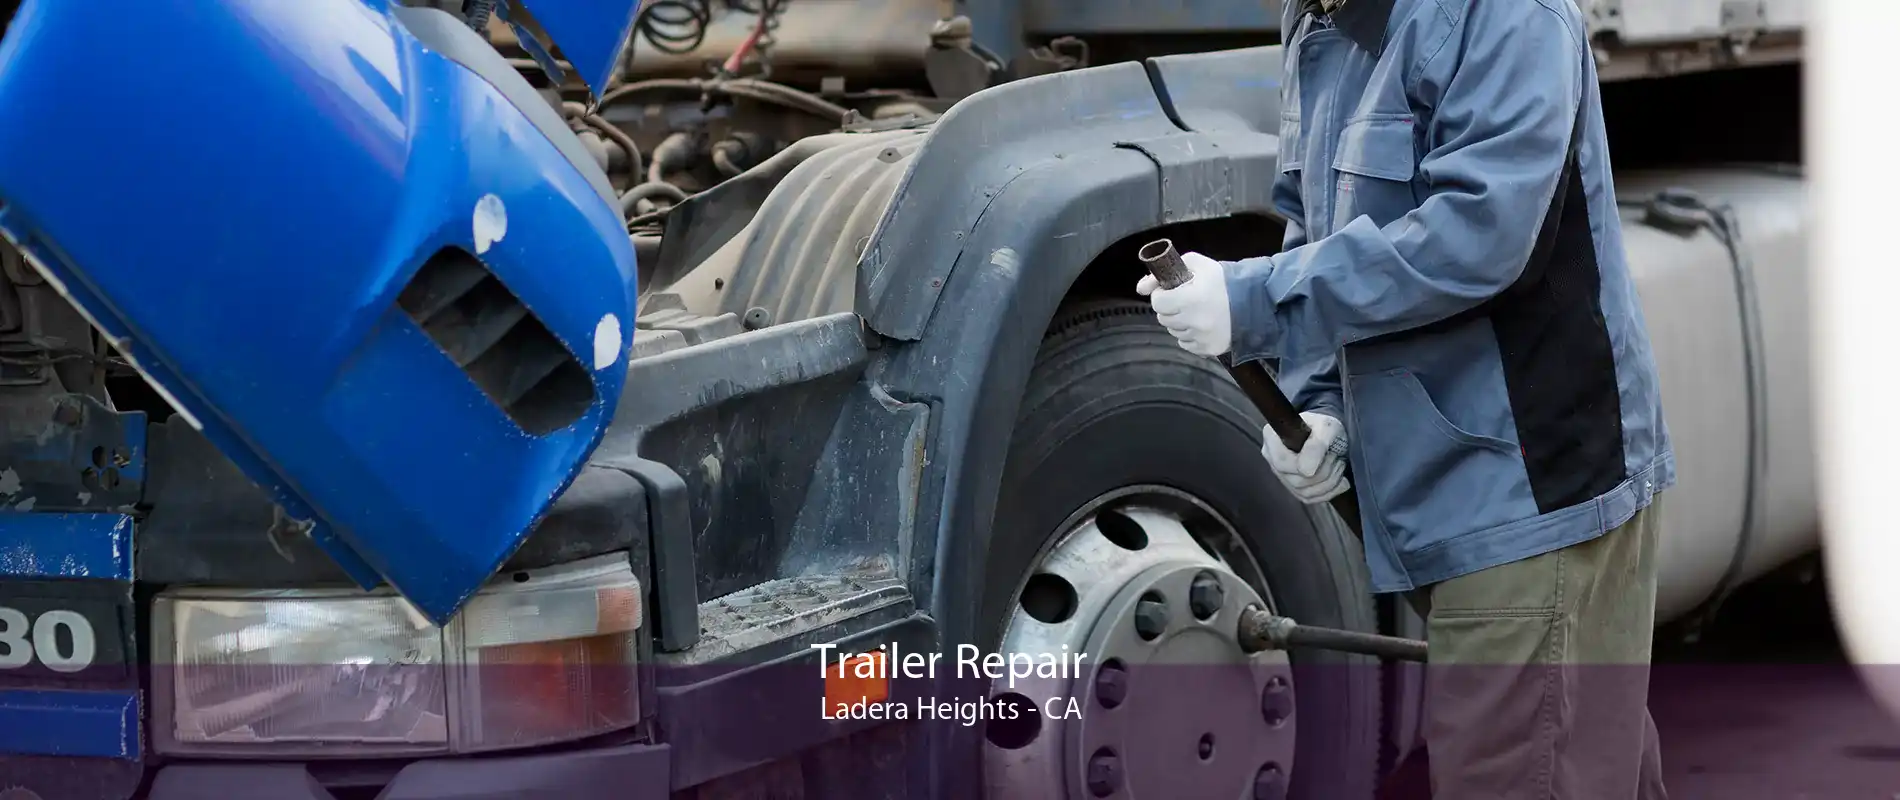 Trailer Repair Ladera Heights - CA